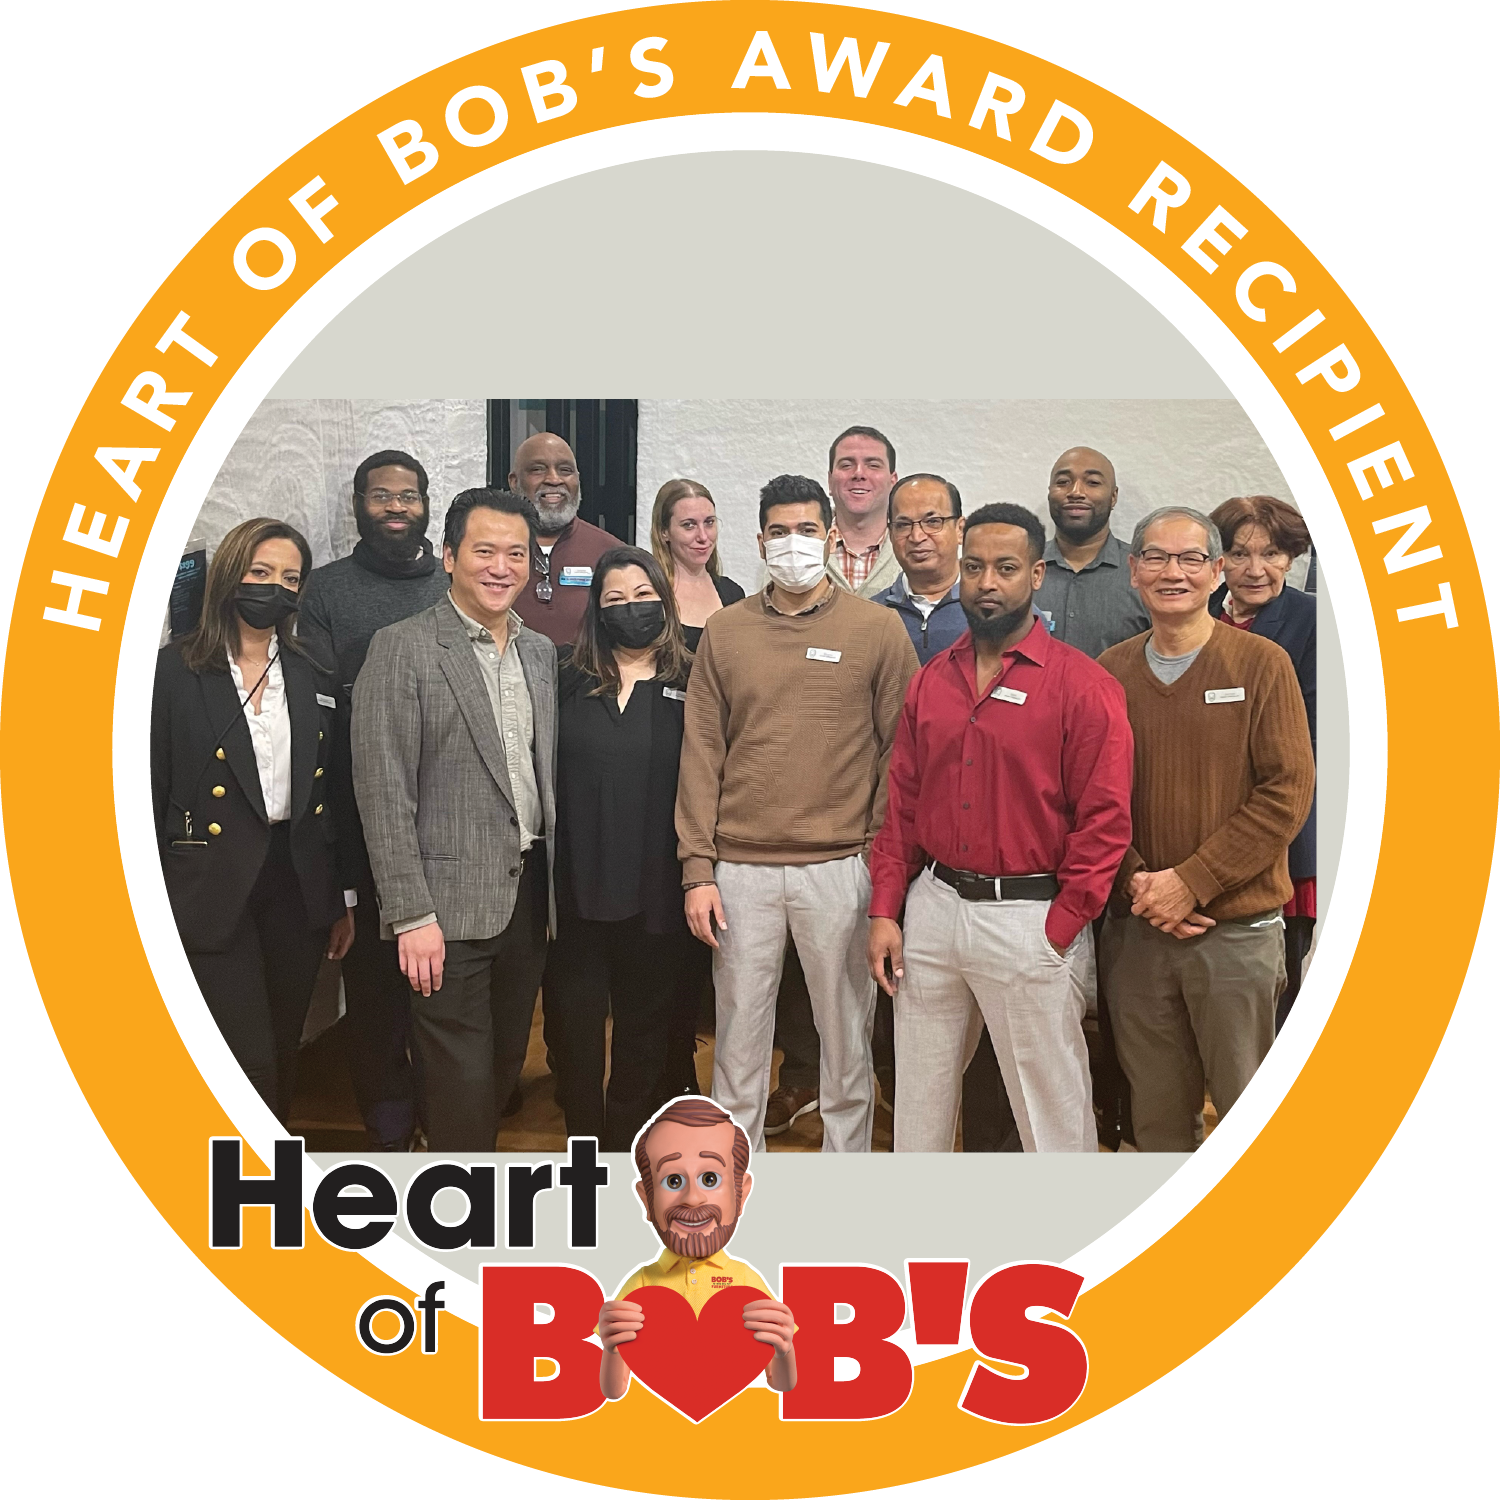 Heart of Bob’s: Celebrating Fun, Community and Service